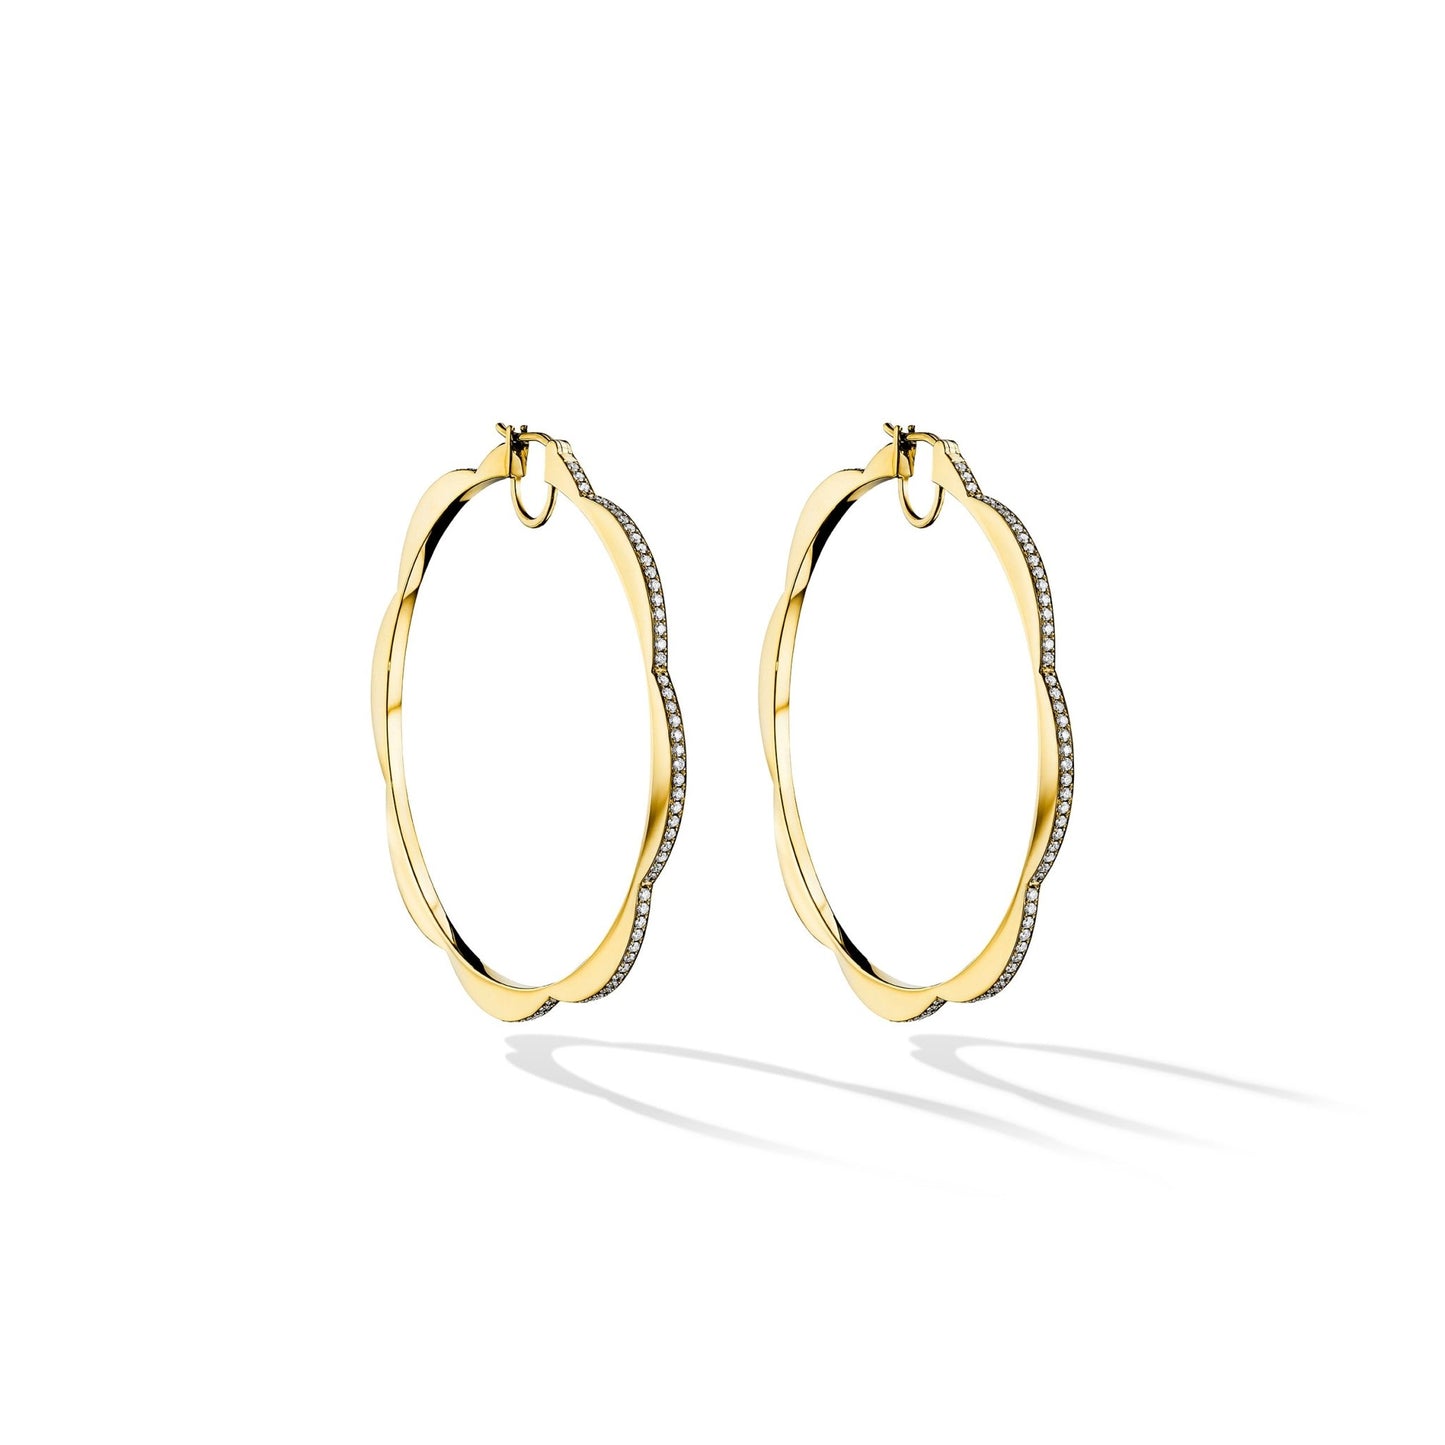 Jumbo Yellow Gold Triplet Hoop Earrings with Black and White Diamonds - Cadar